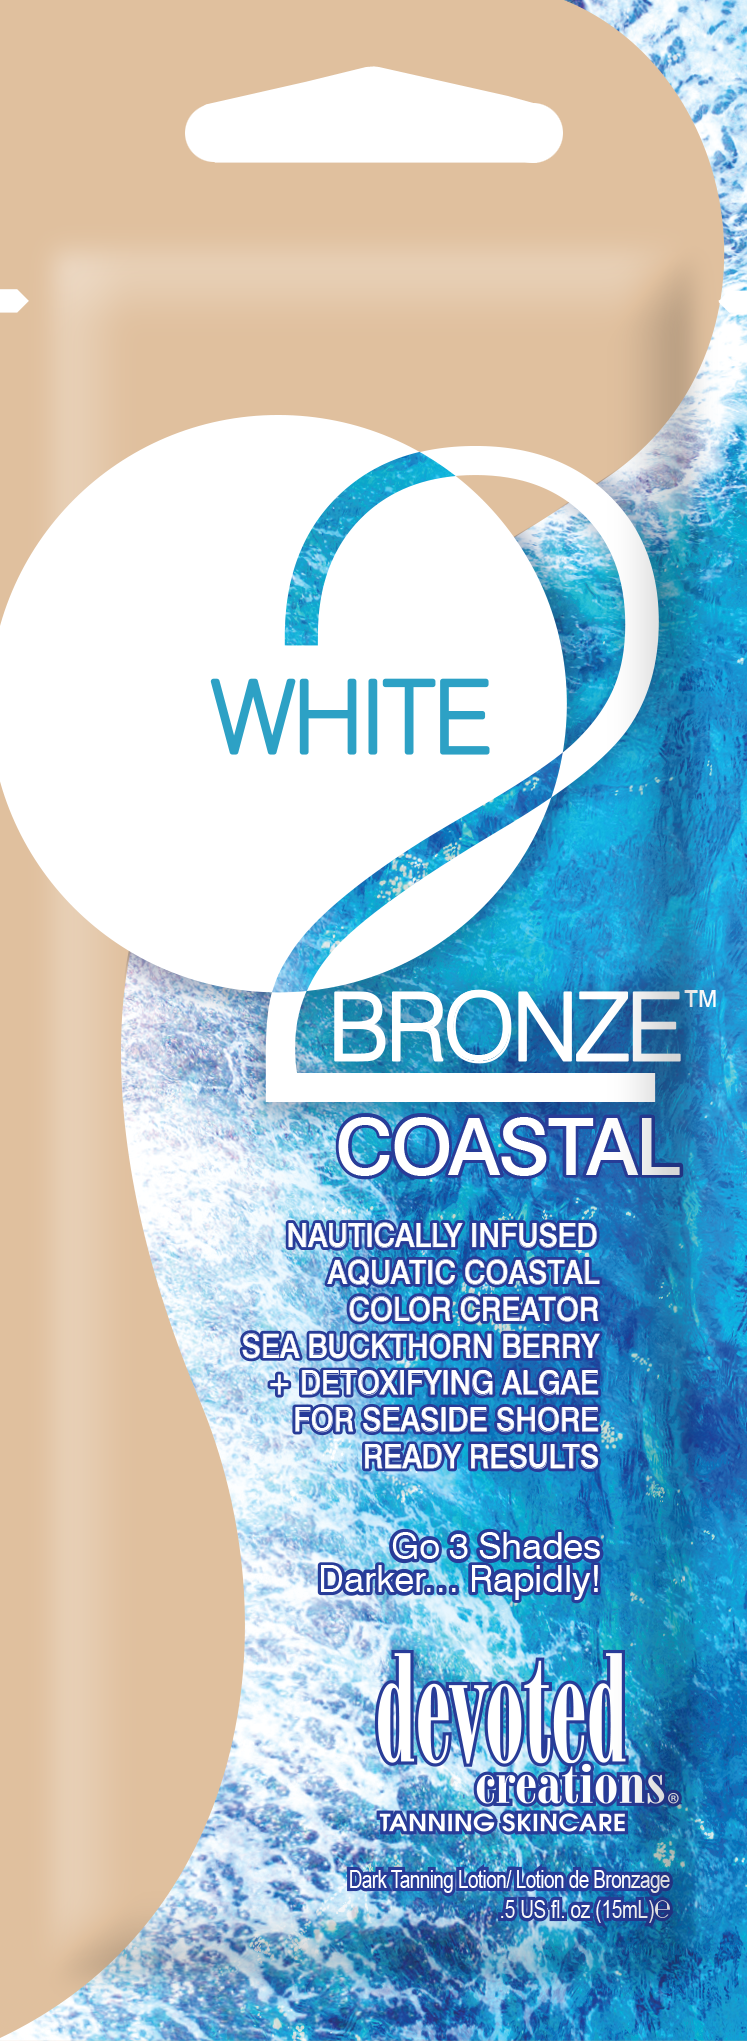 Devoted Creations | White 2 Bronze Coastal